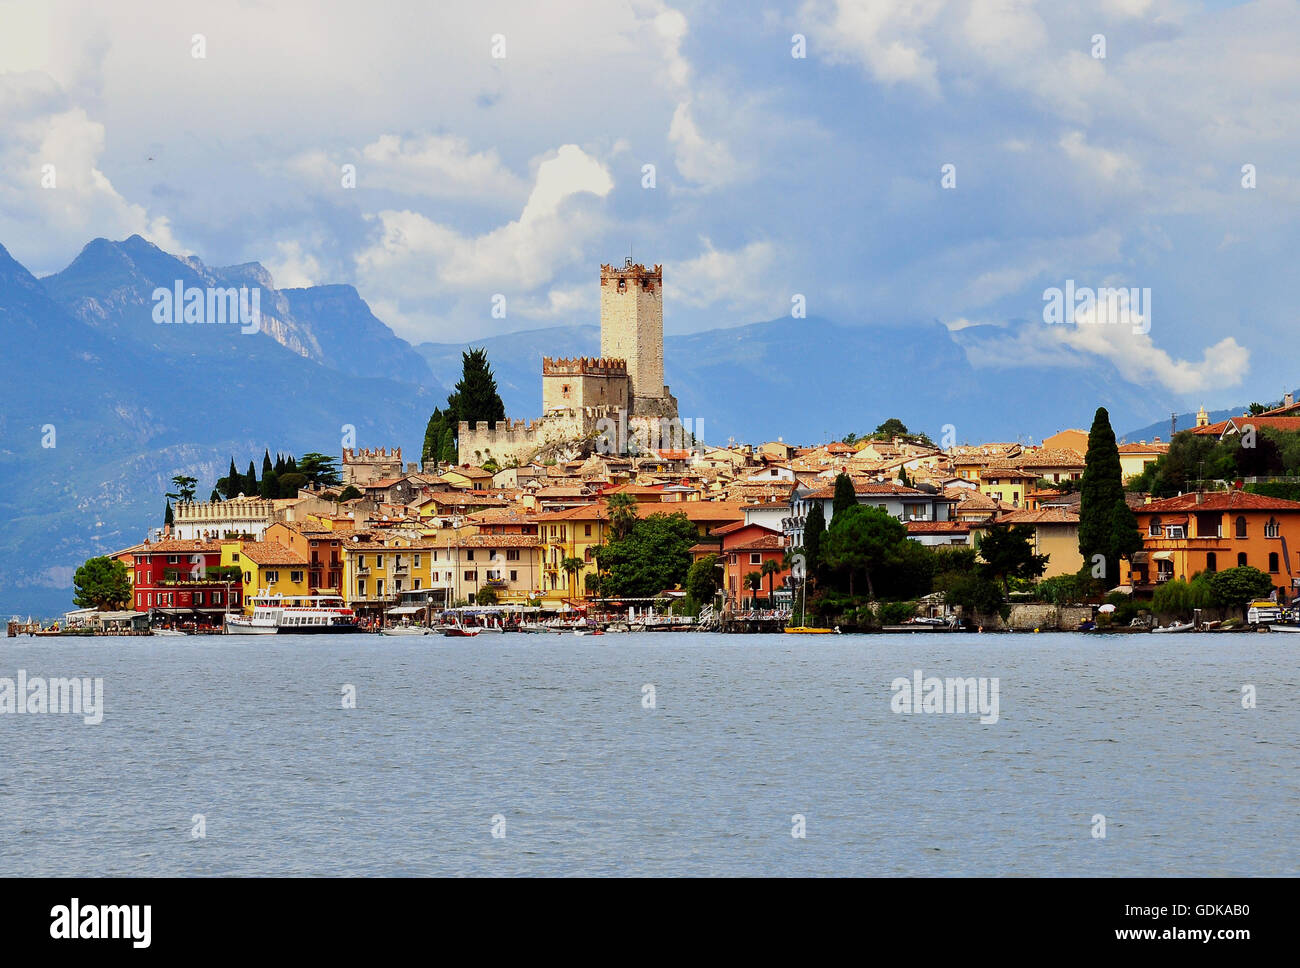 Malcesine, Garda lake, Lombardia region, Italy Stock Photo